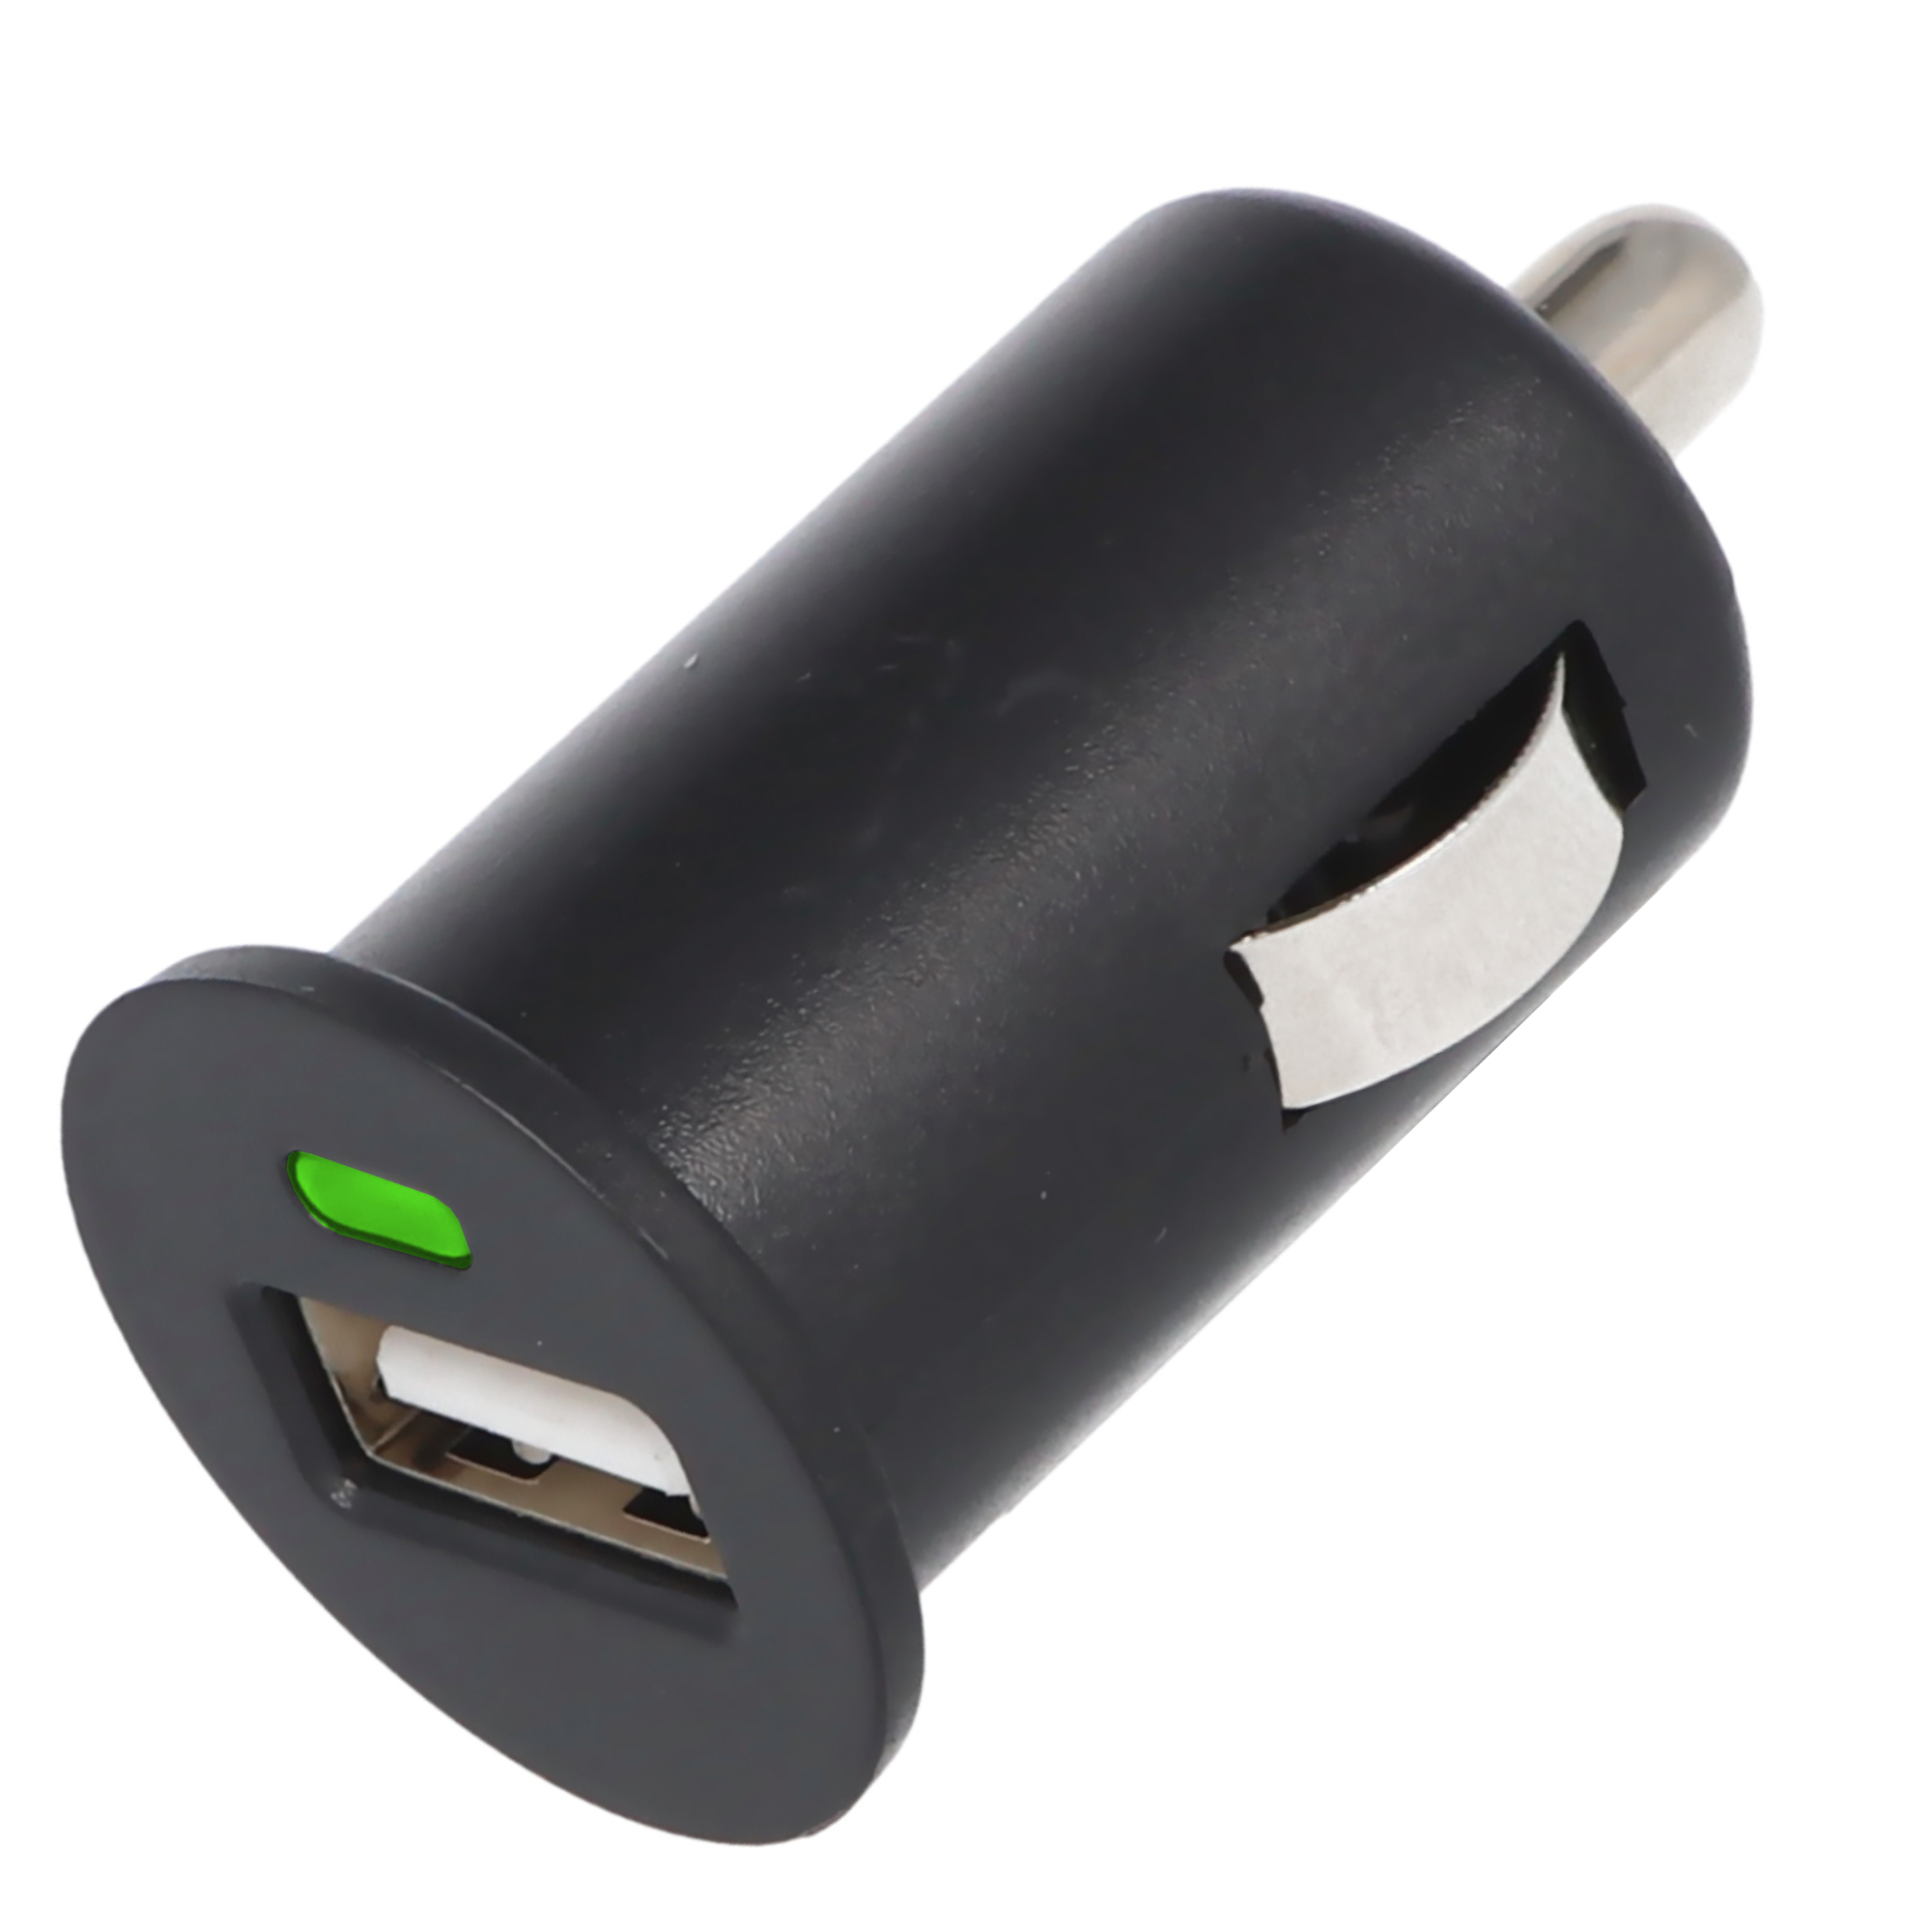 KFZ-USB-Adapter Test: Die besten USB-Autoladegeräte